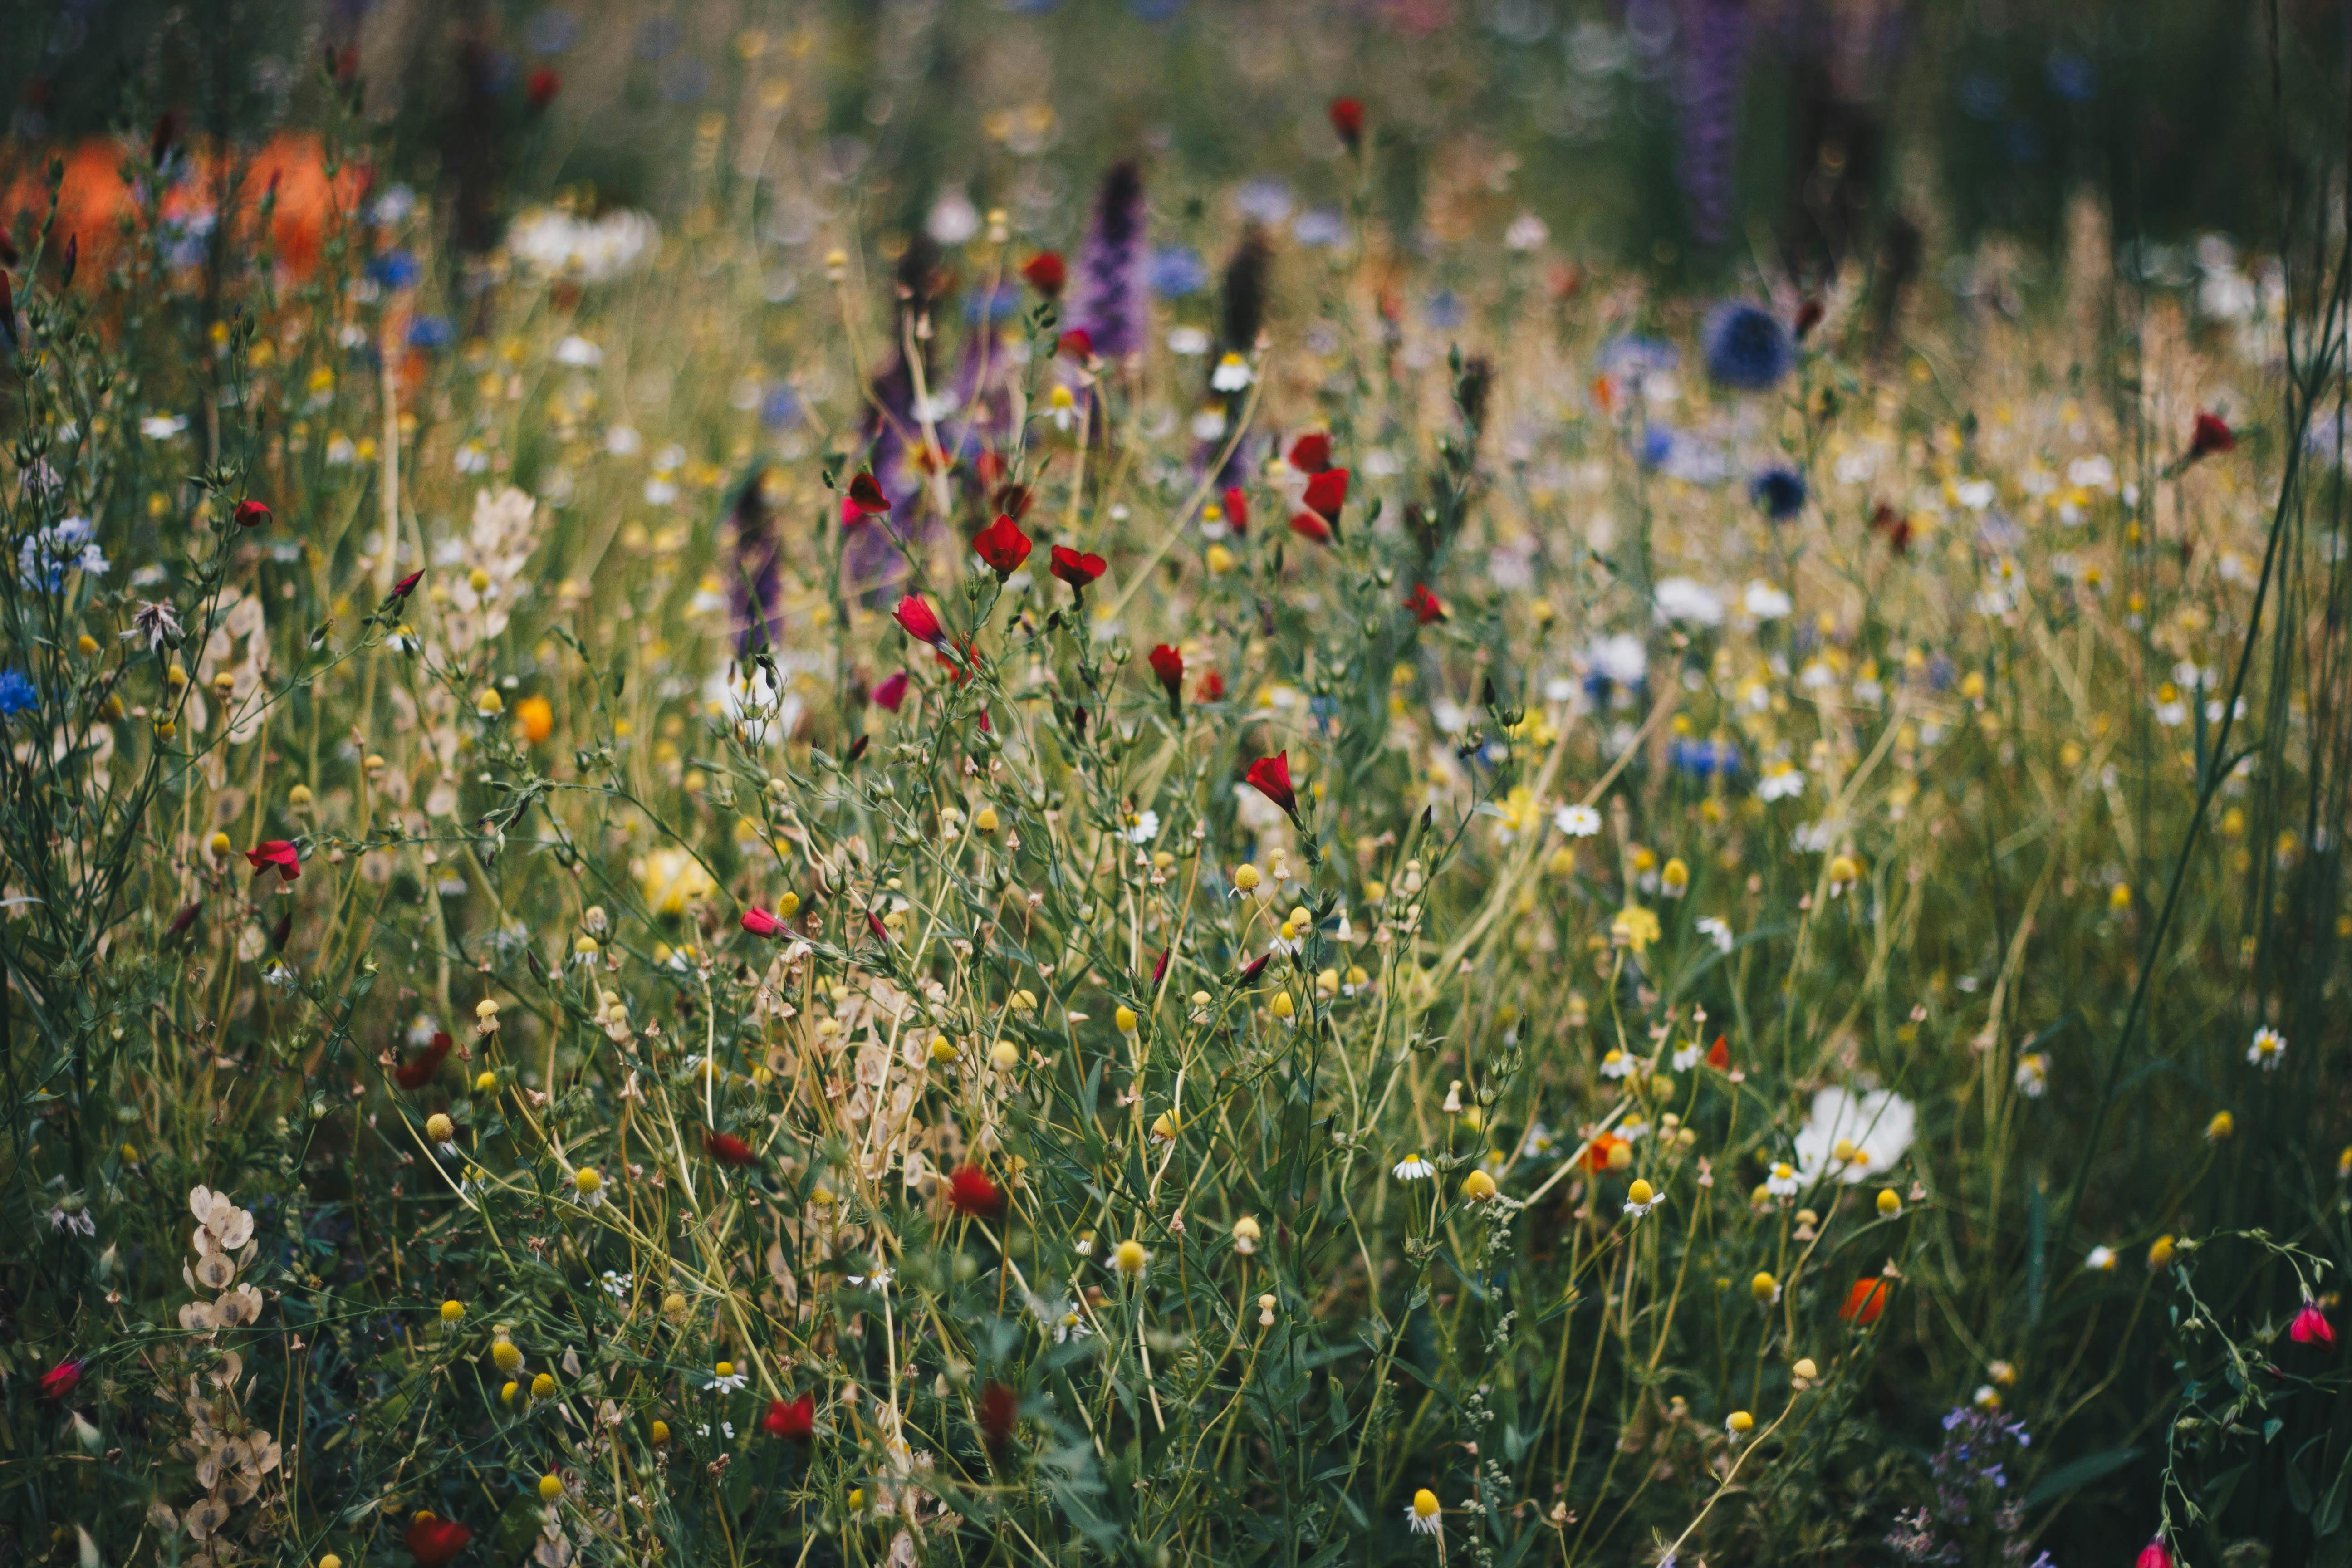 1000+ Interesting Wild Flowers Photos Â· Pexels Â· Free Stock Photos